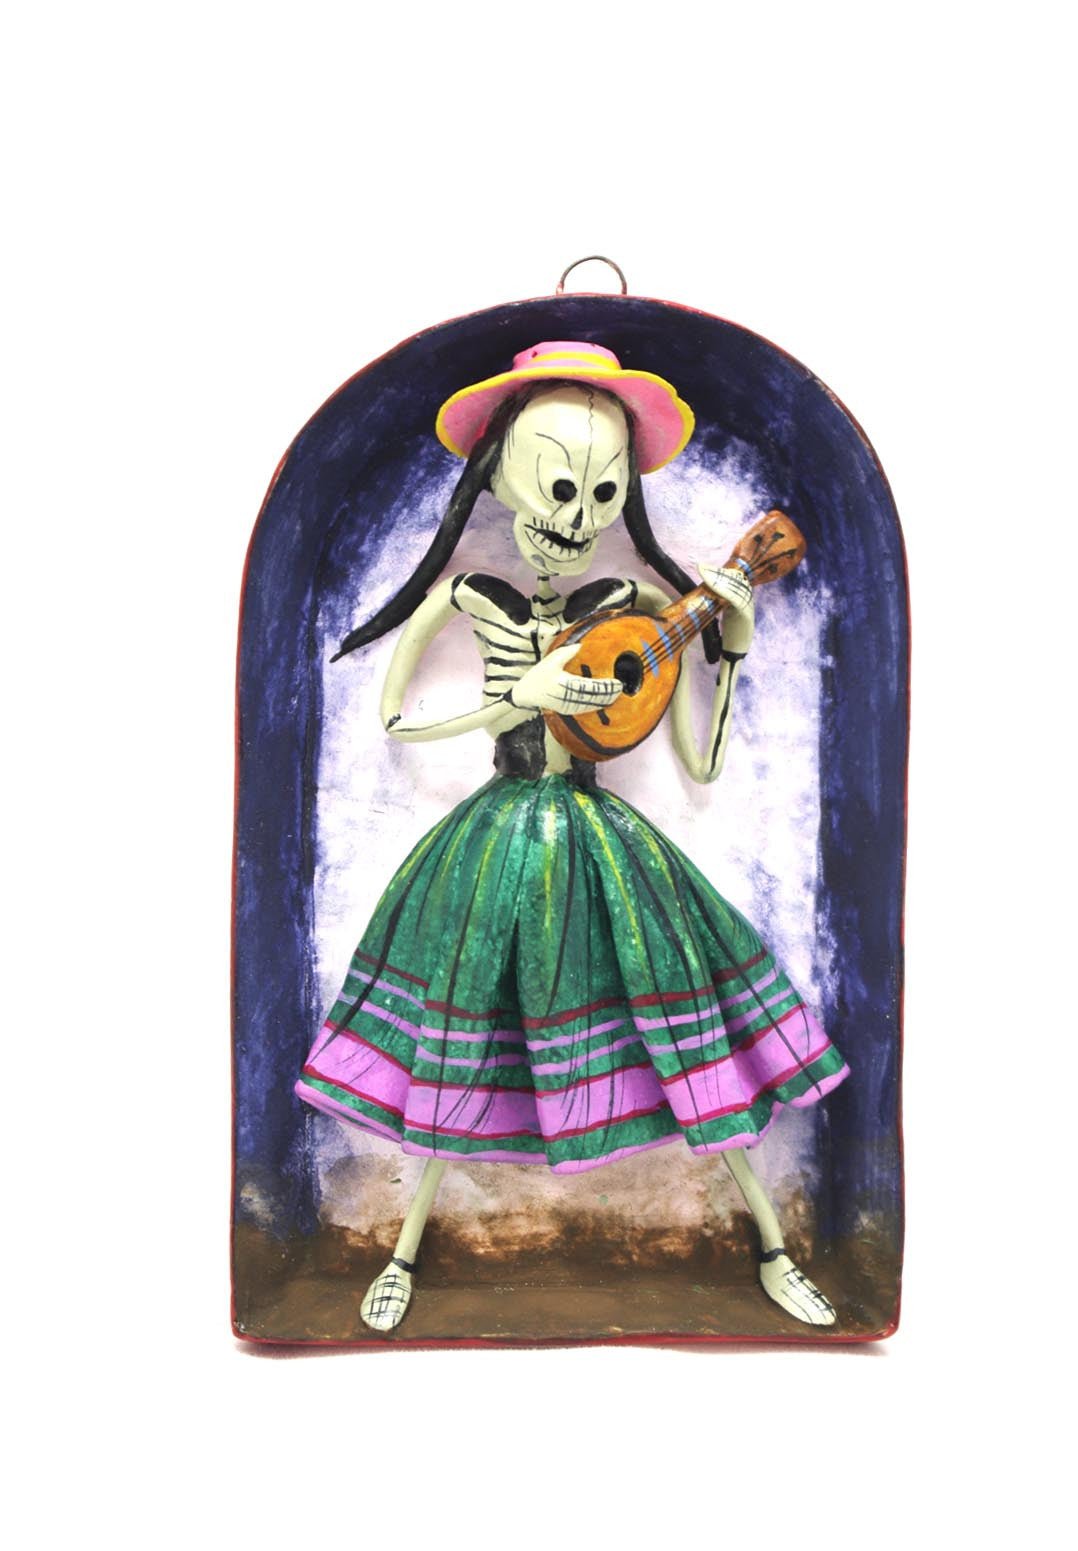 Musician Skeleton Day of Dead Wall Retablo - Alternatives Global Marketplace